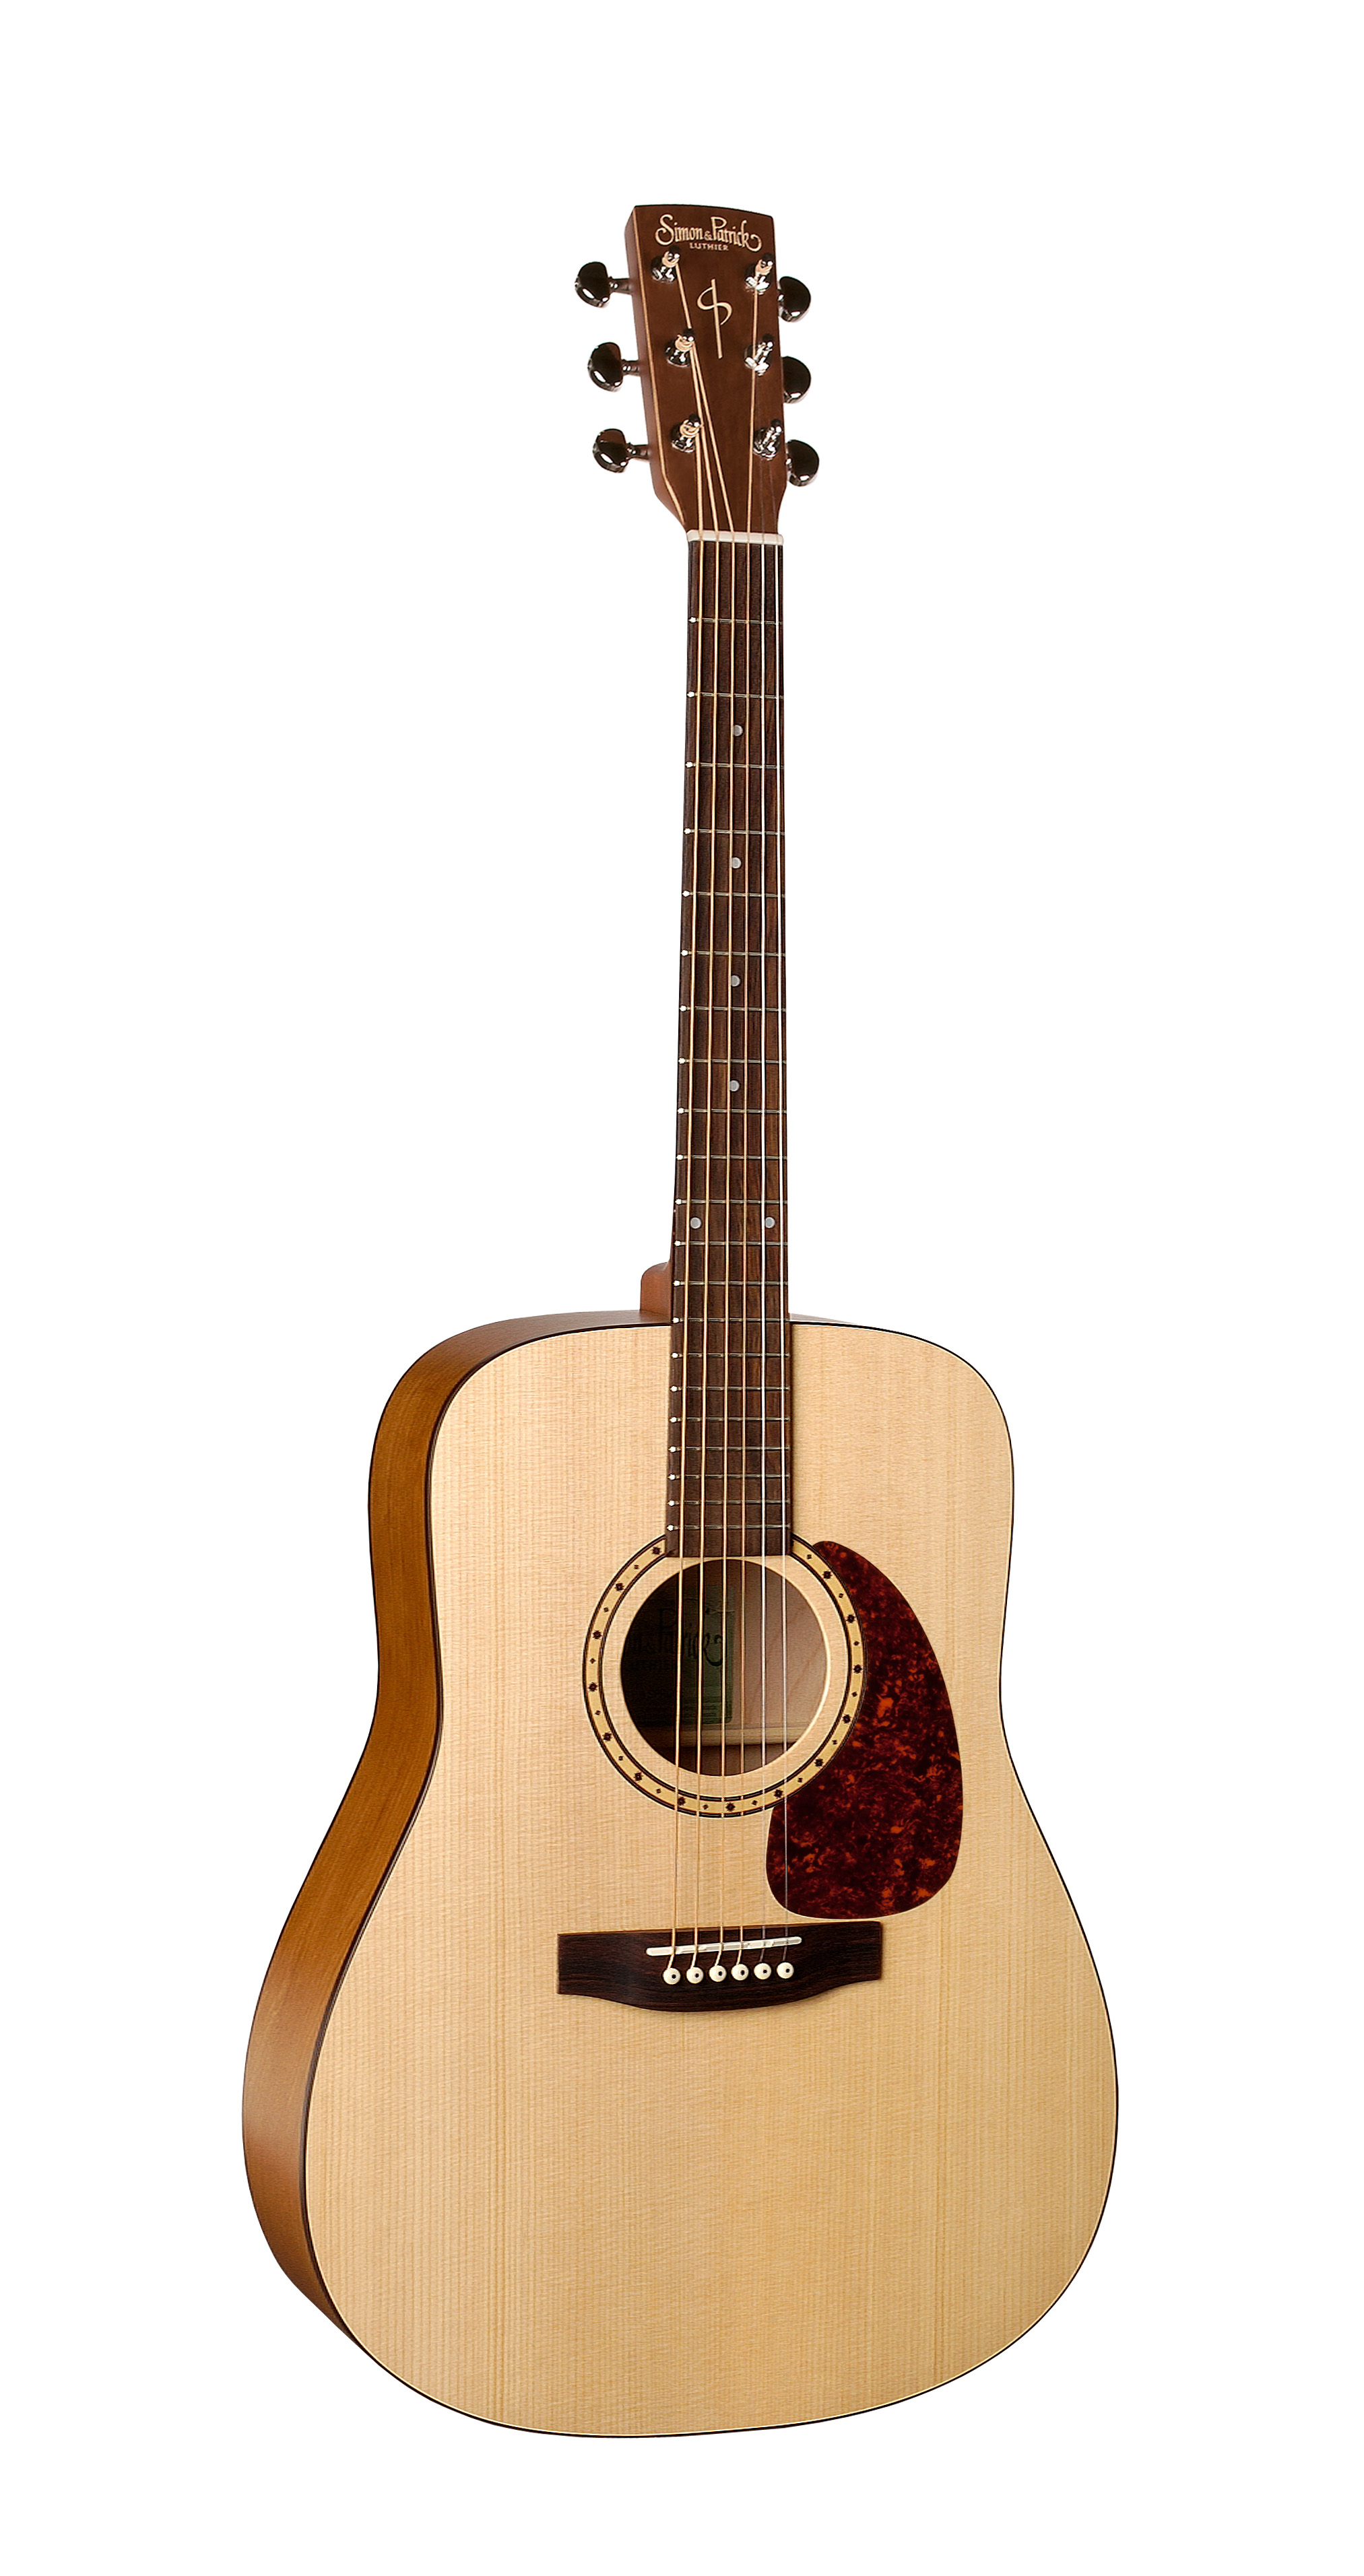 Simon & Patrick 29099 Woodland Spruce Acoustic Guitar